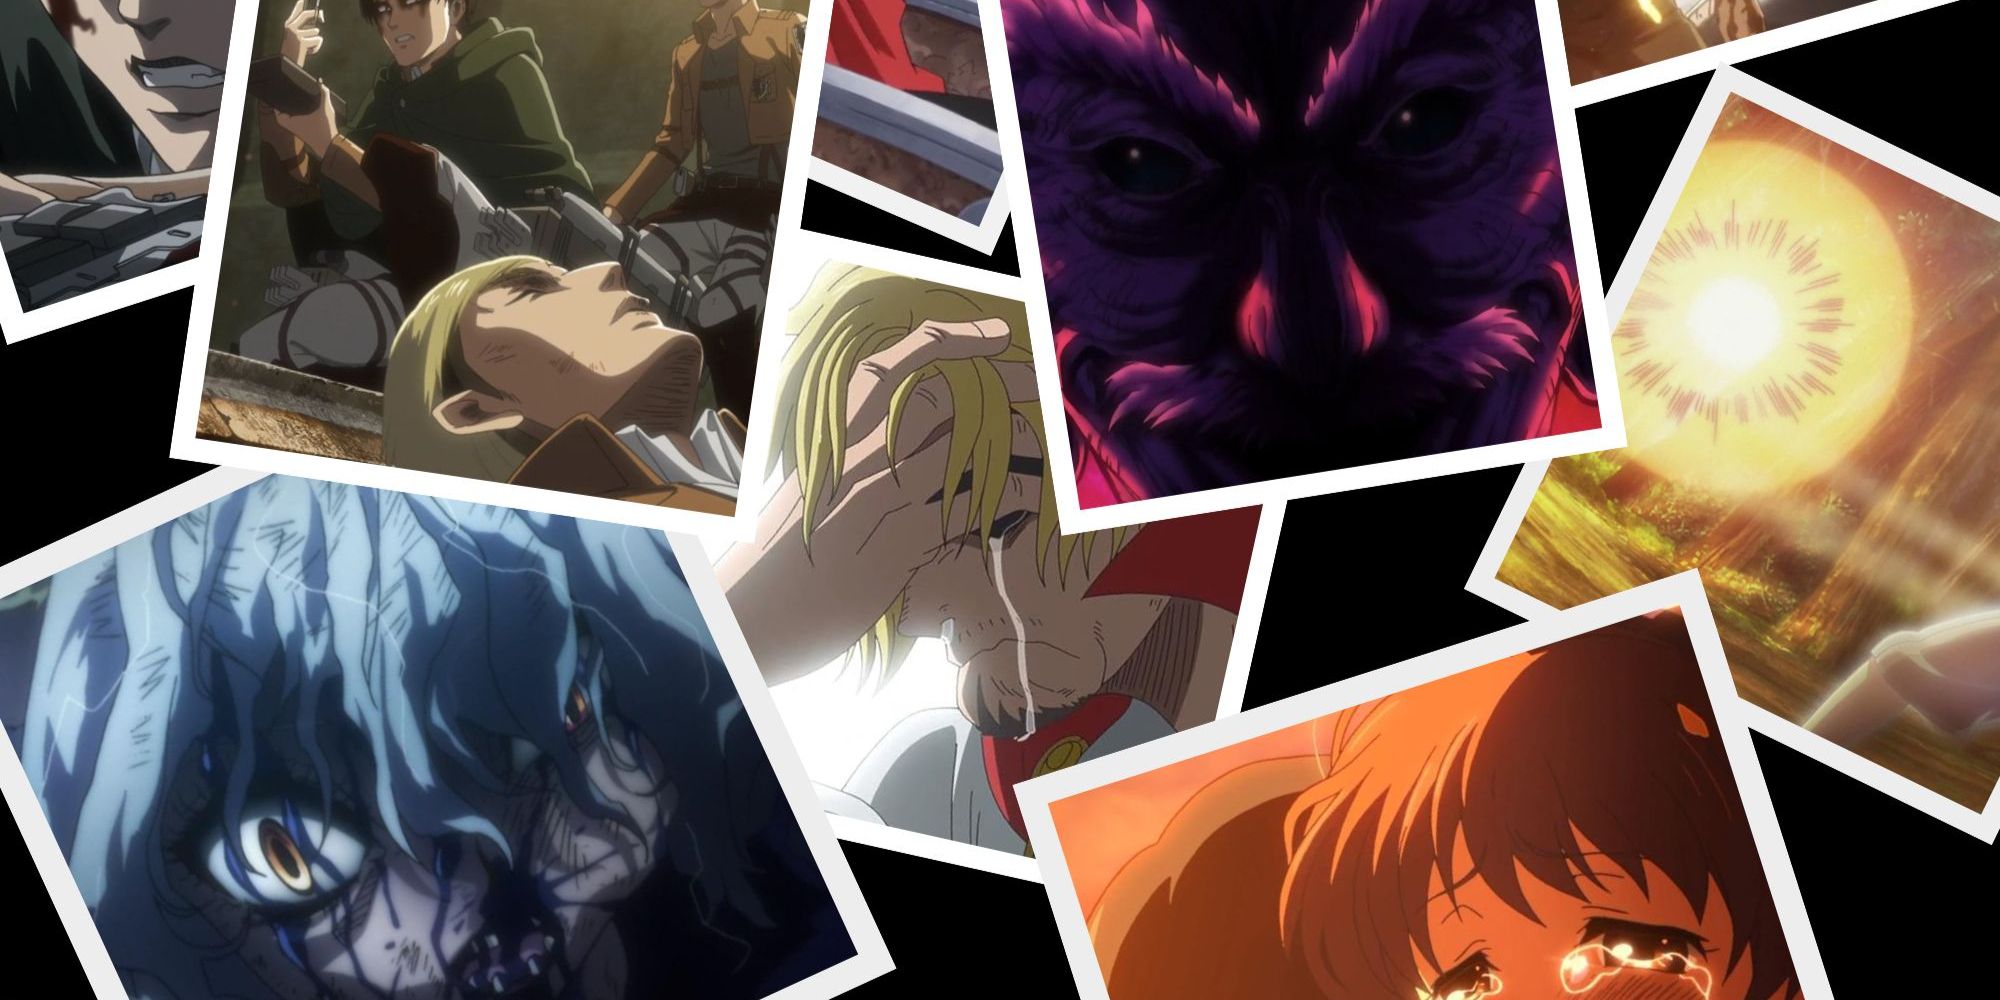 10 Highest Rated Anime Episodes According To IMDb